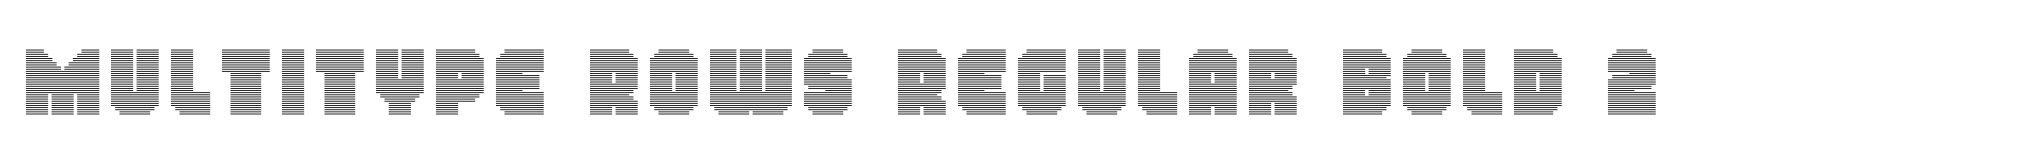 MultiType Rows Regular Bold 2 image